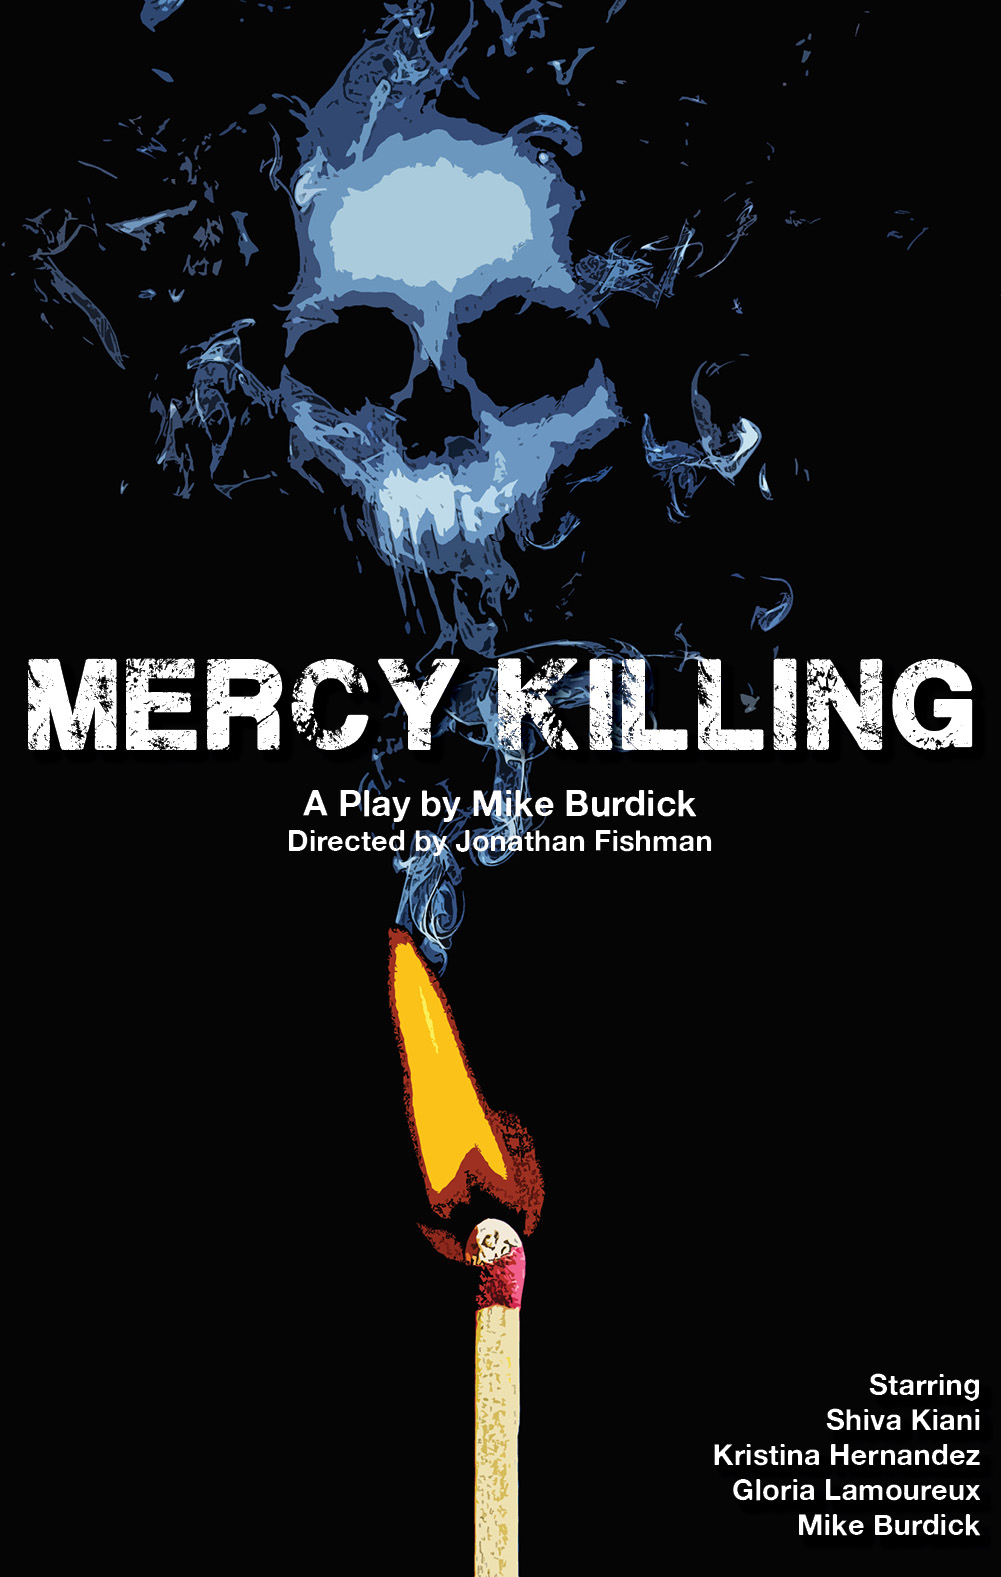 mercy killing argumentative essay